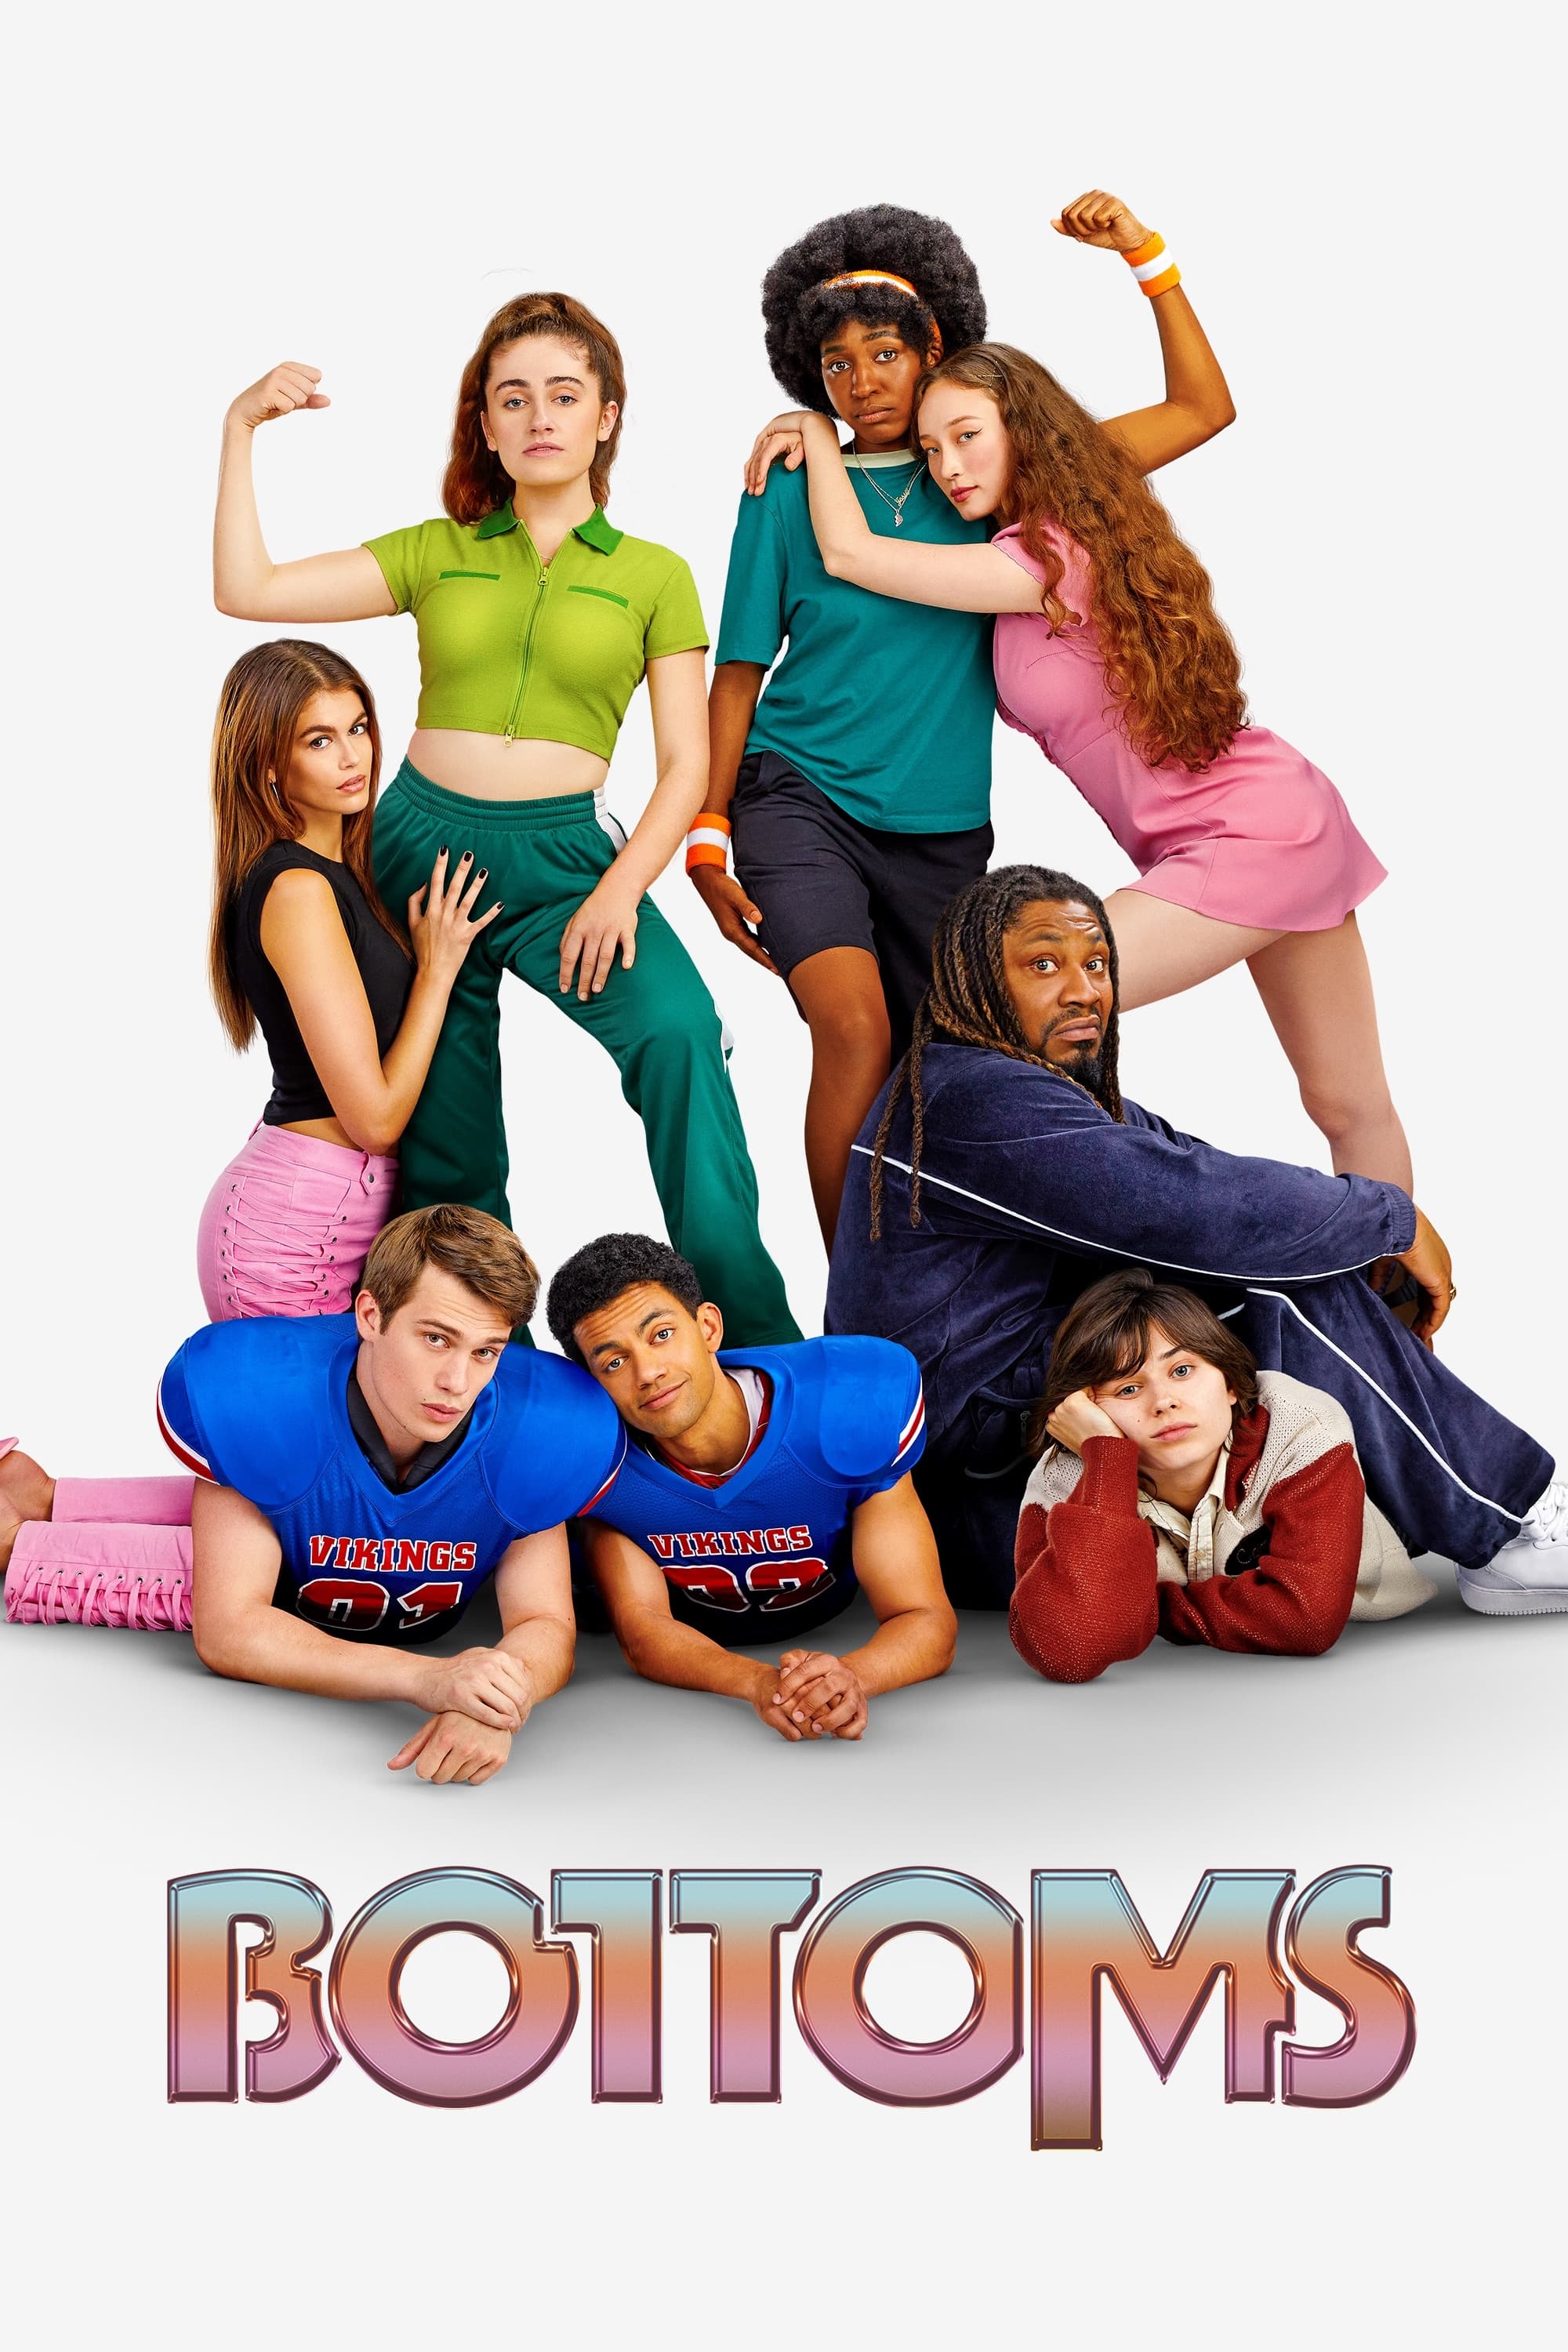 Bottoms film